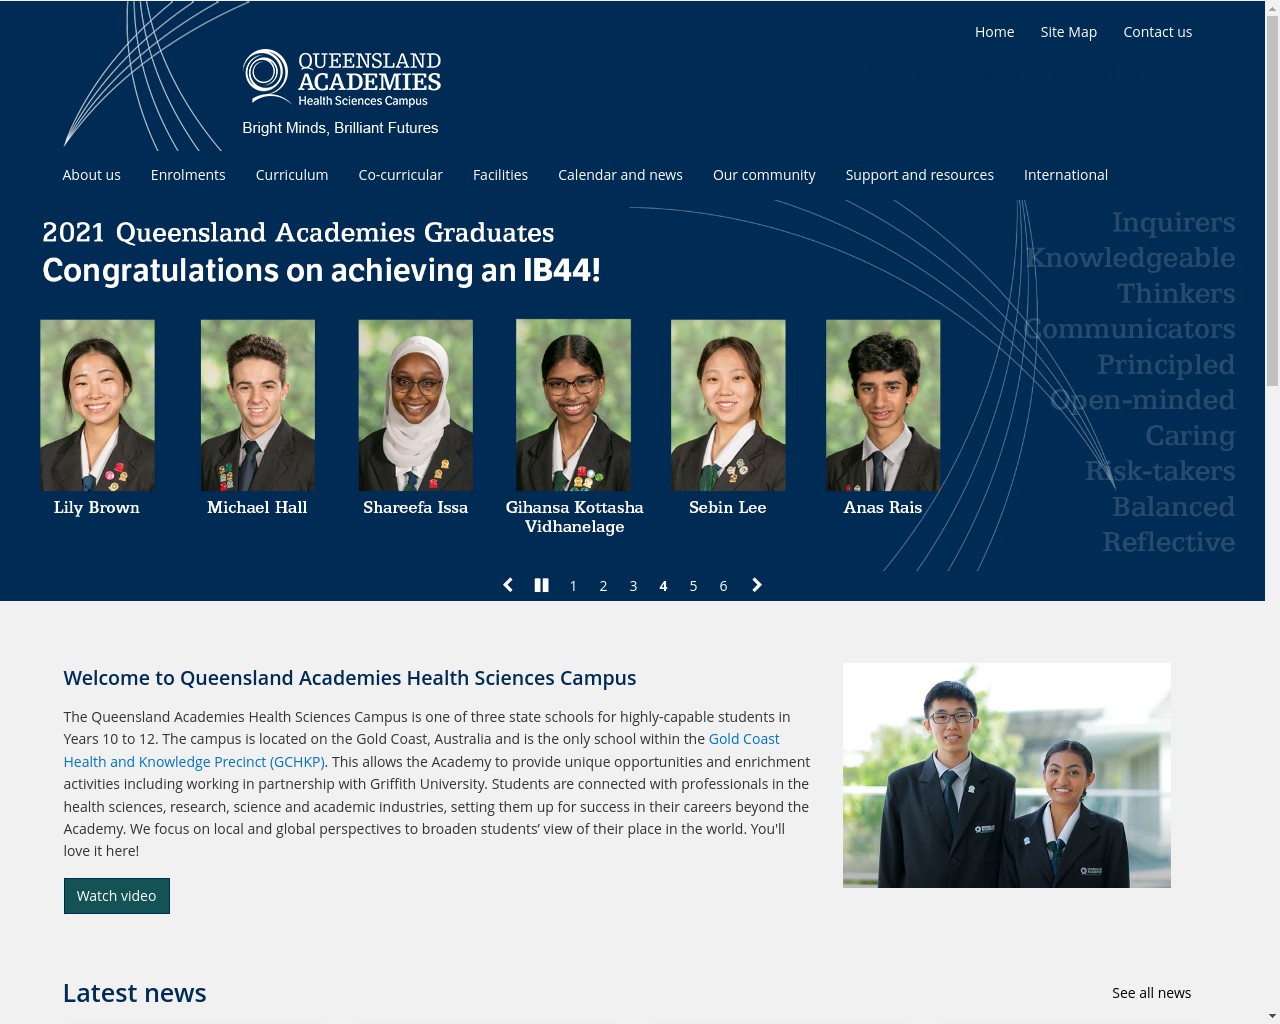 Queensland Academy for Health Sciences